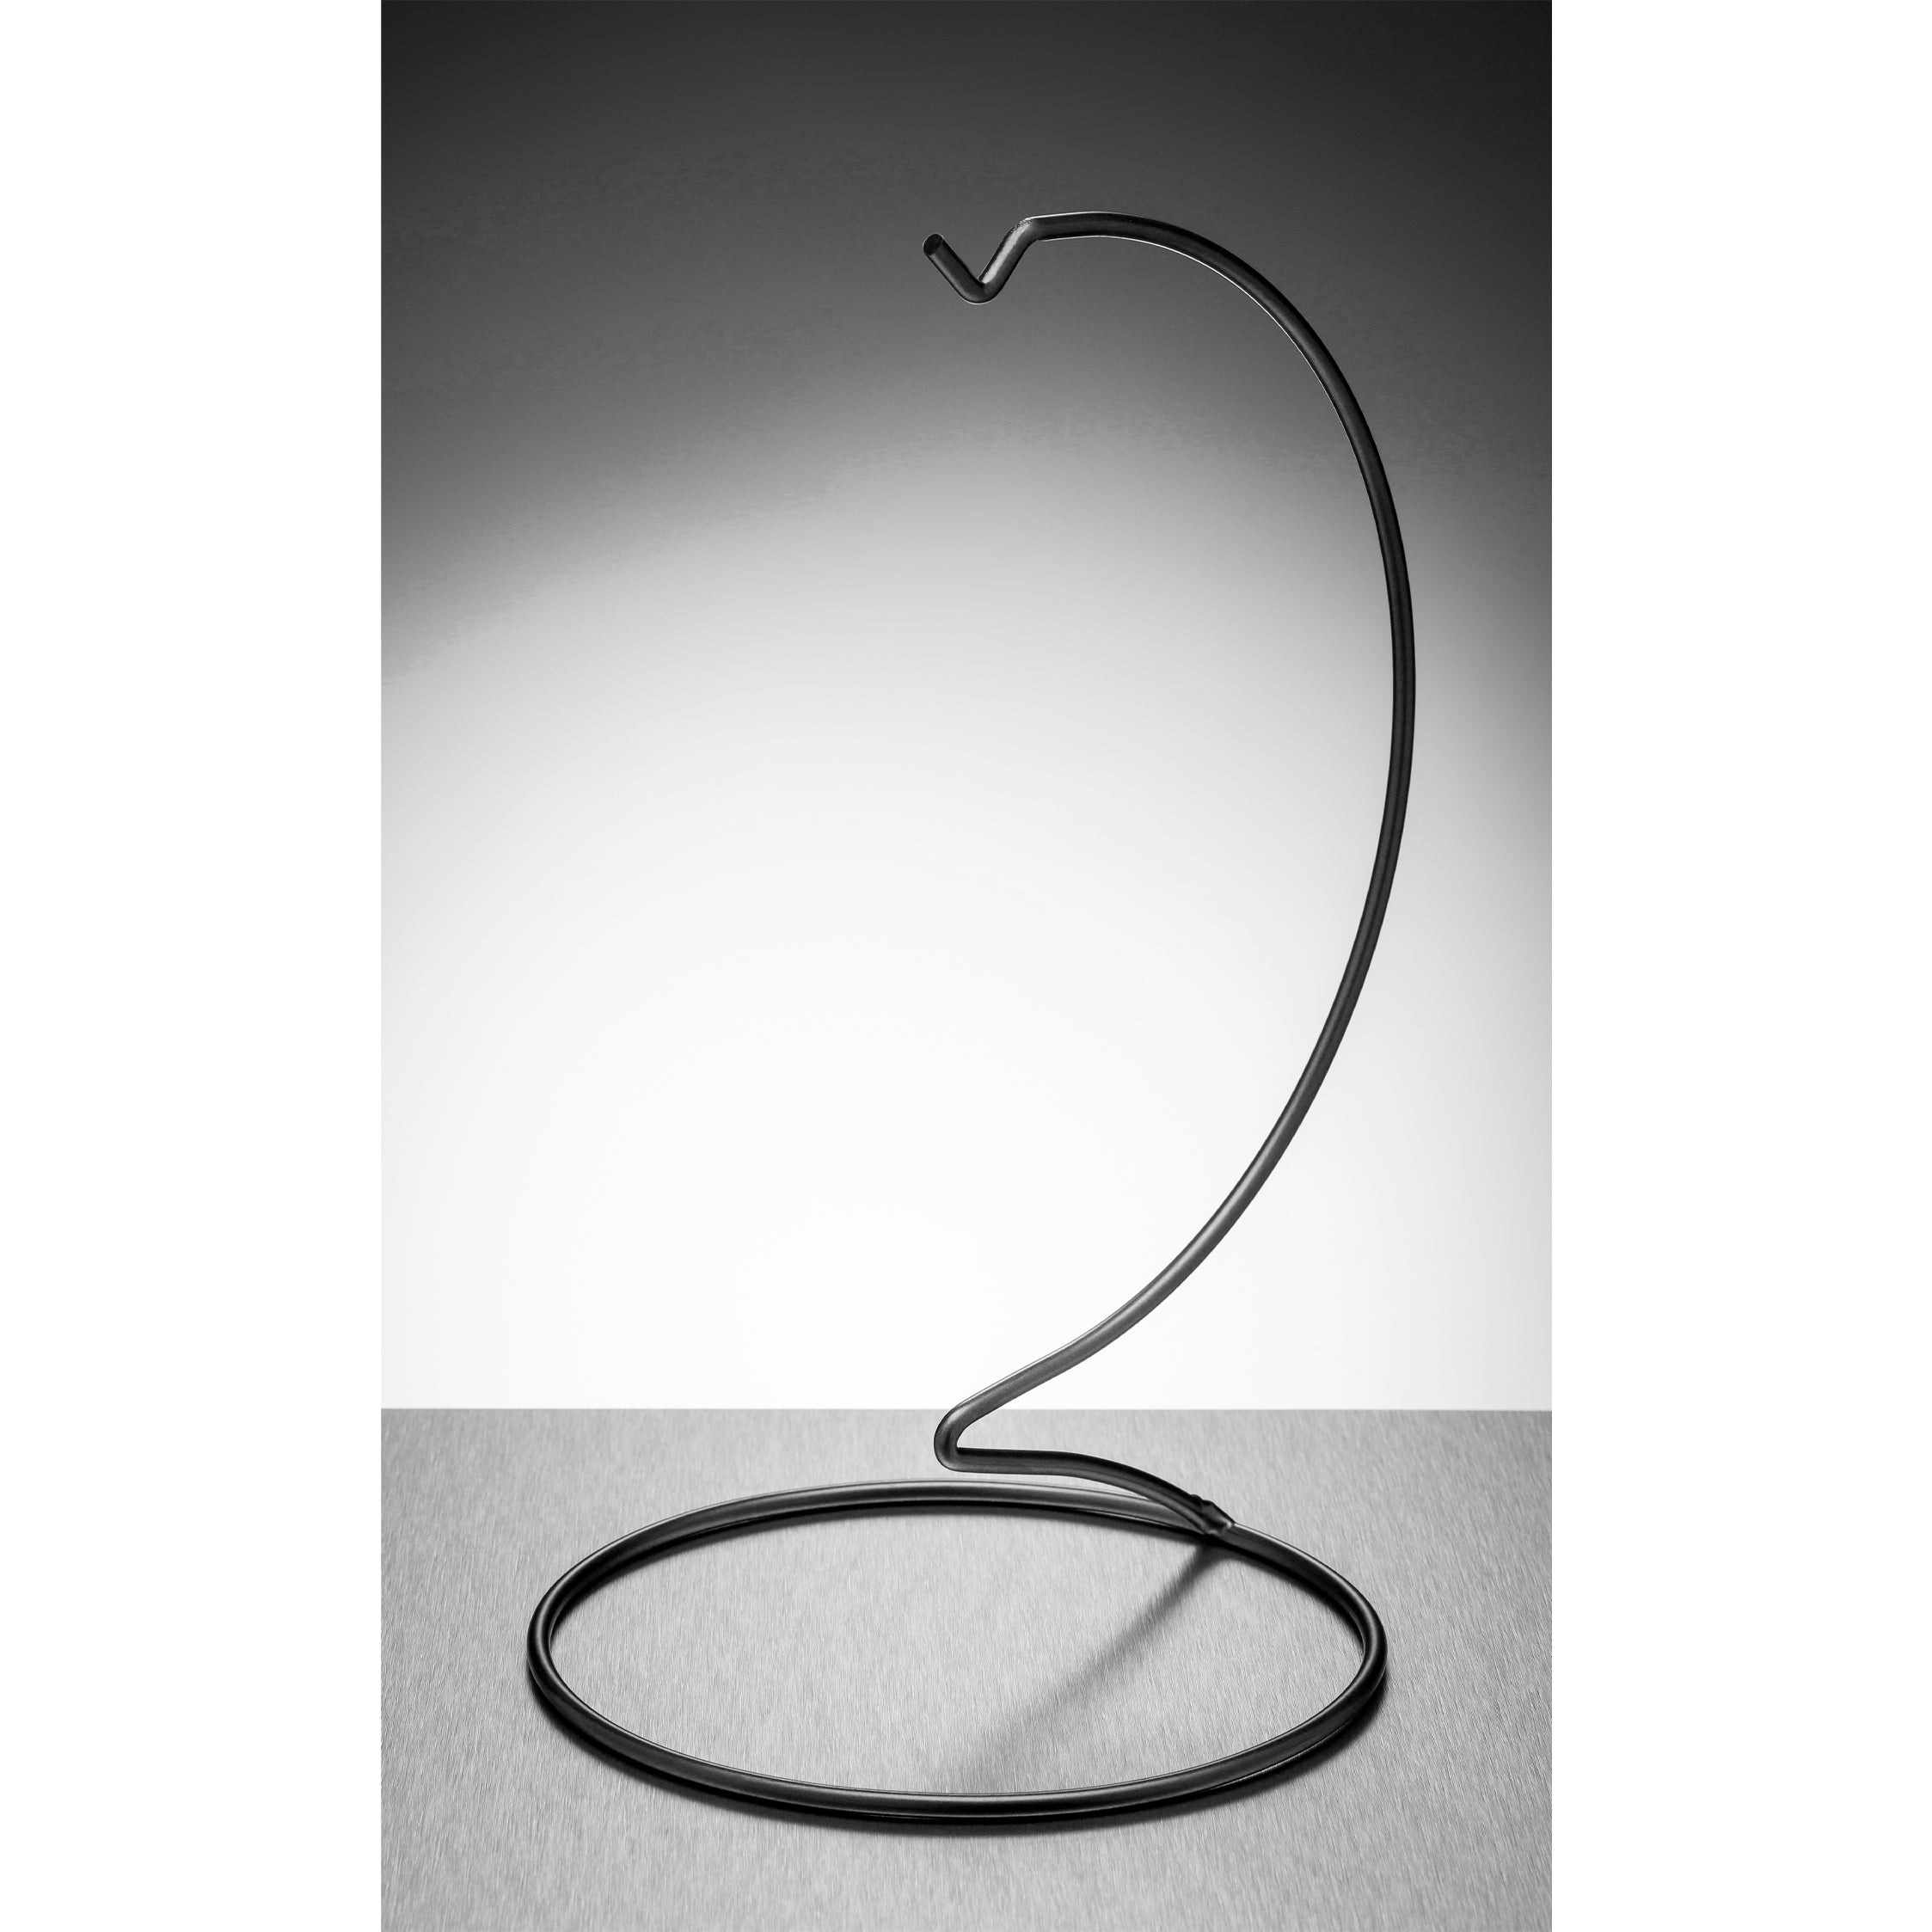 Black Metal Ornament Stand - Large - Aspire Art Glass